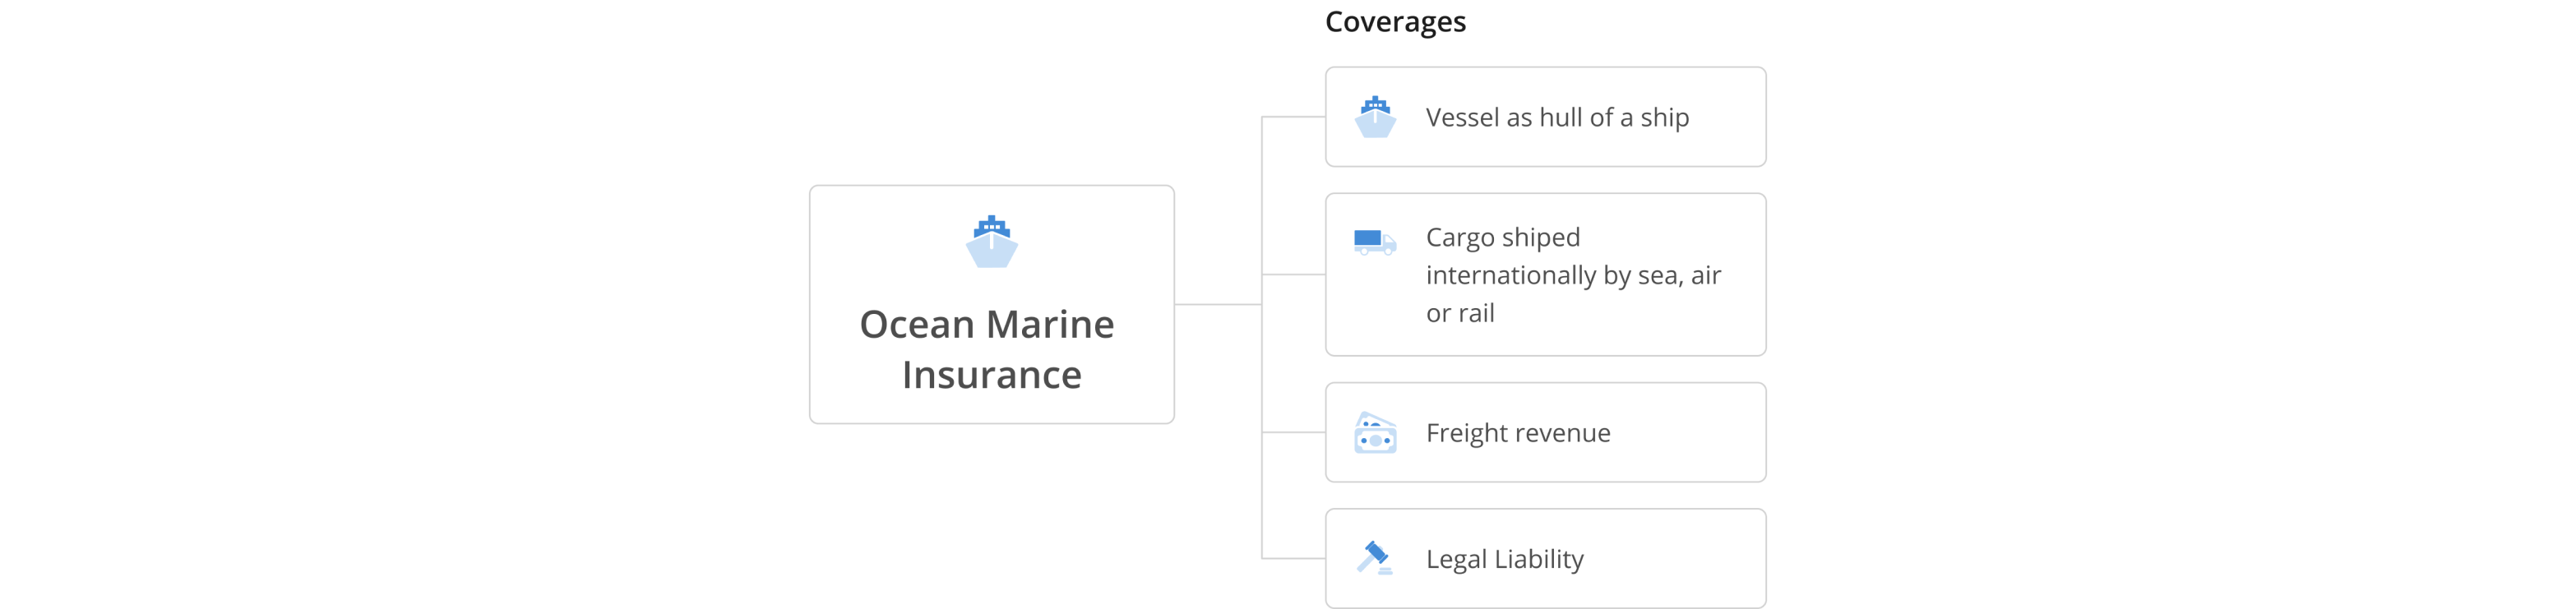 NEW - DESKTOP - Infographic - Ocean Marine Insurance@2x